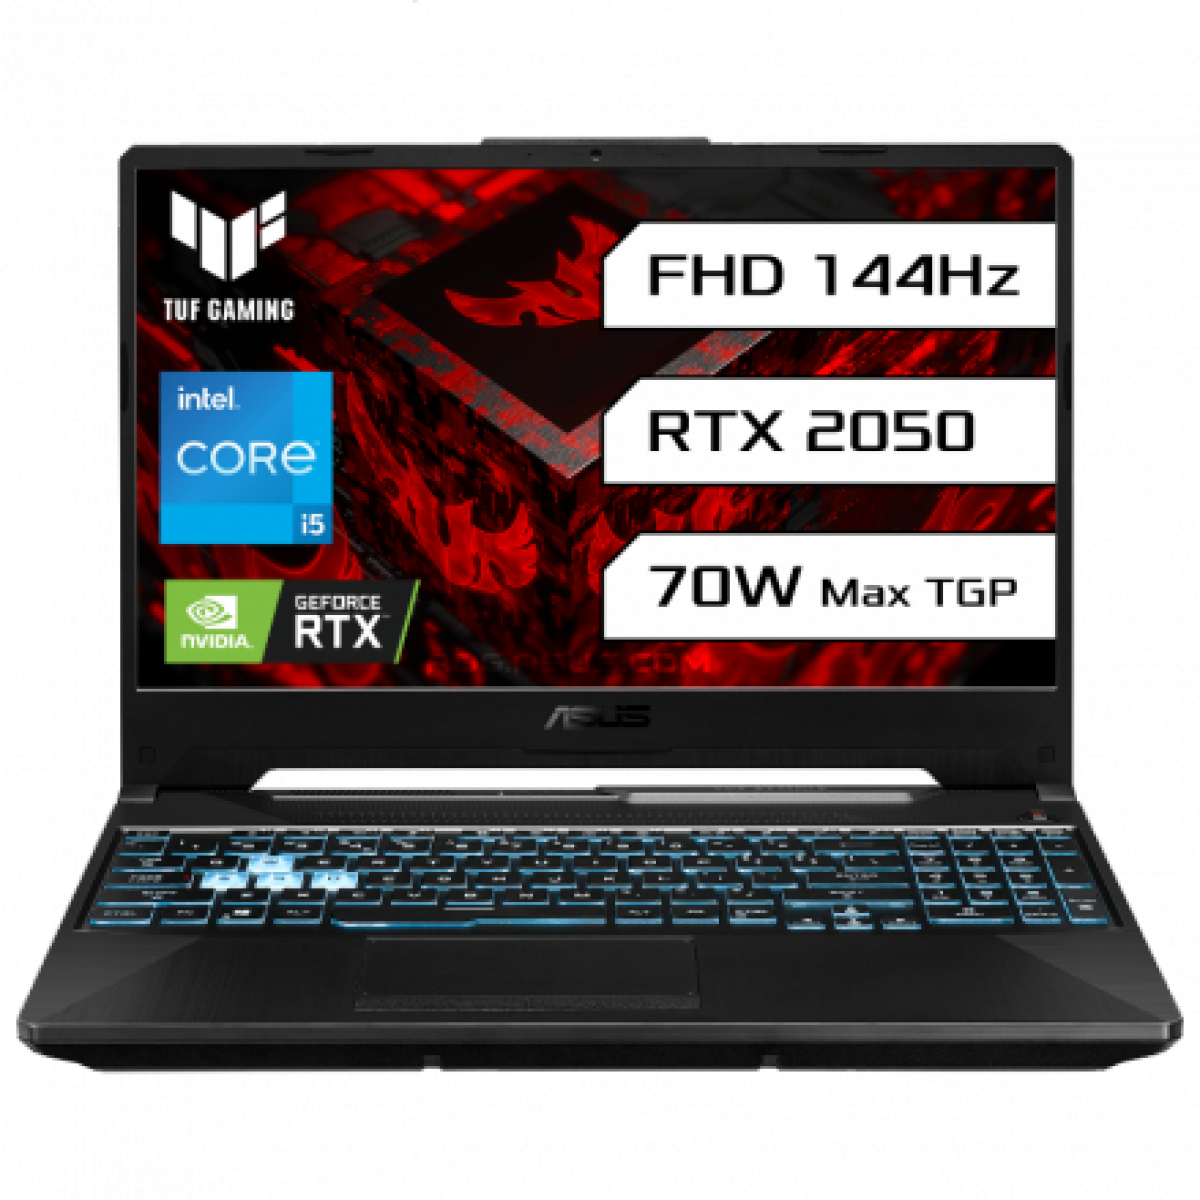 ASUS TUF Gaming F15 Core i5-11400H, 8GB DDR4, 11th Generation RTX 2050 4GB DDR6 144Hz Laptop